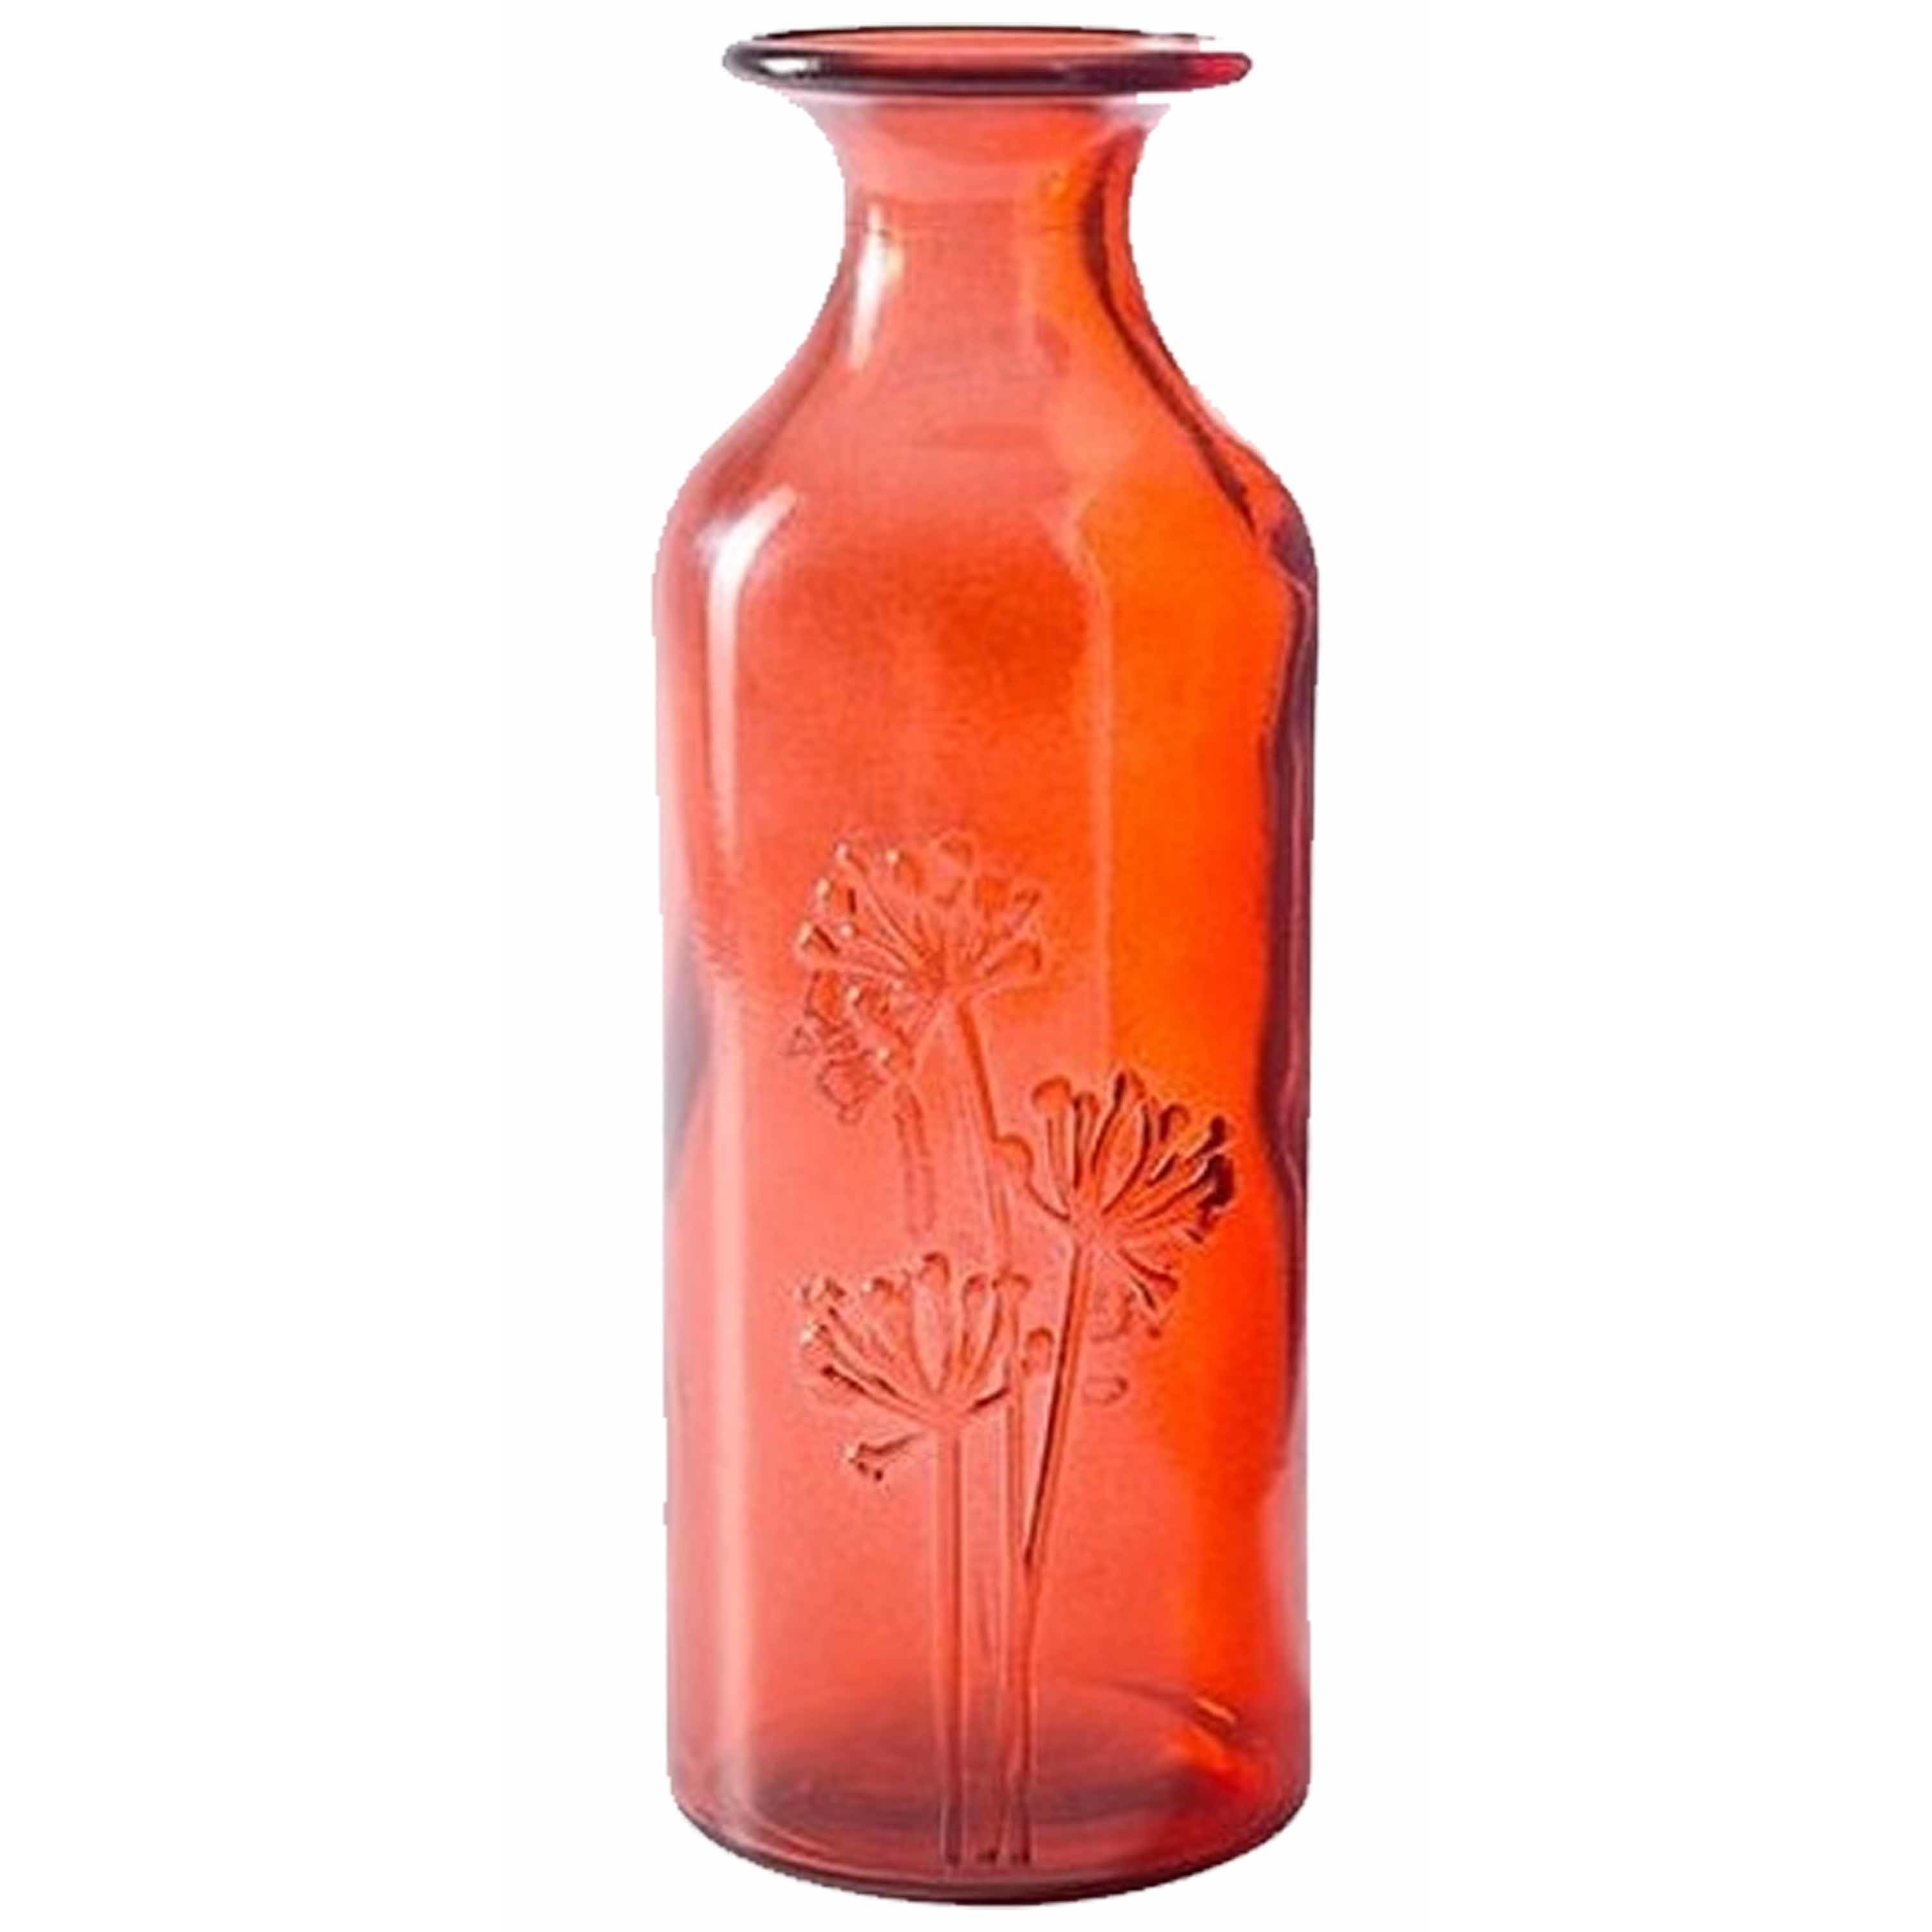 Paperdesign Rode fles vaas 7 x 19 cm glas Home Deco vazen rood Woonaccessoires